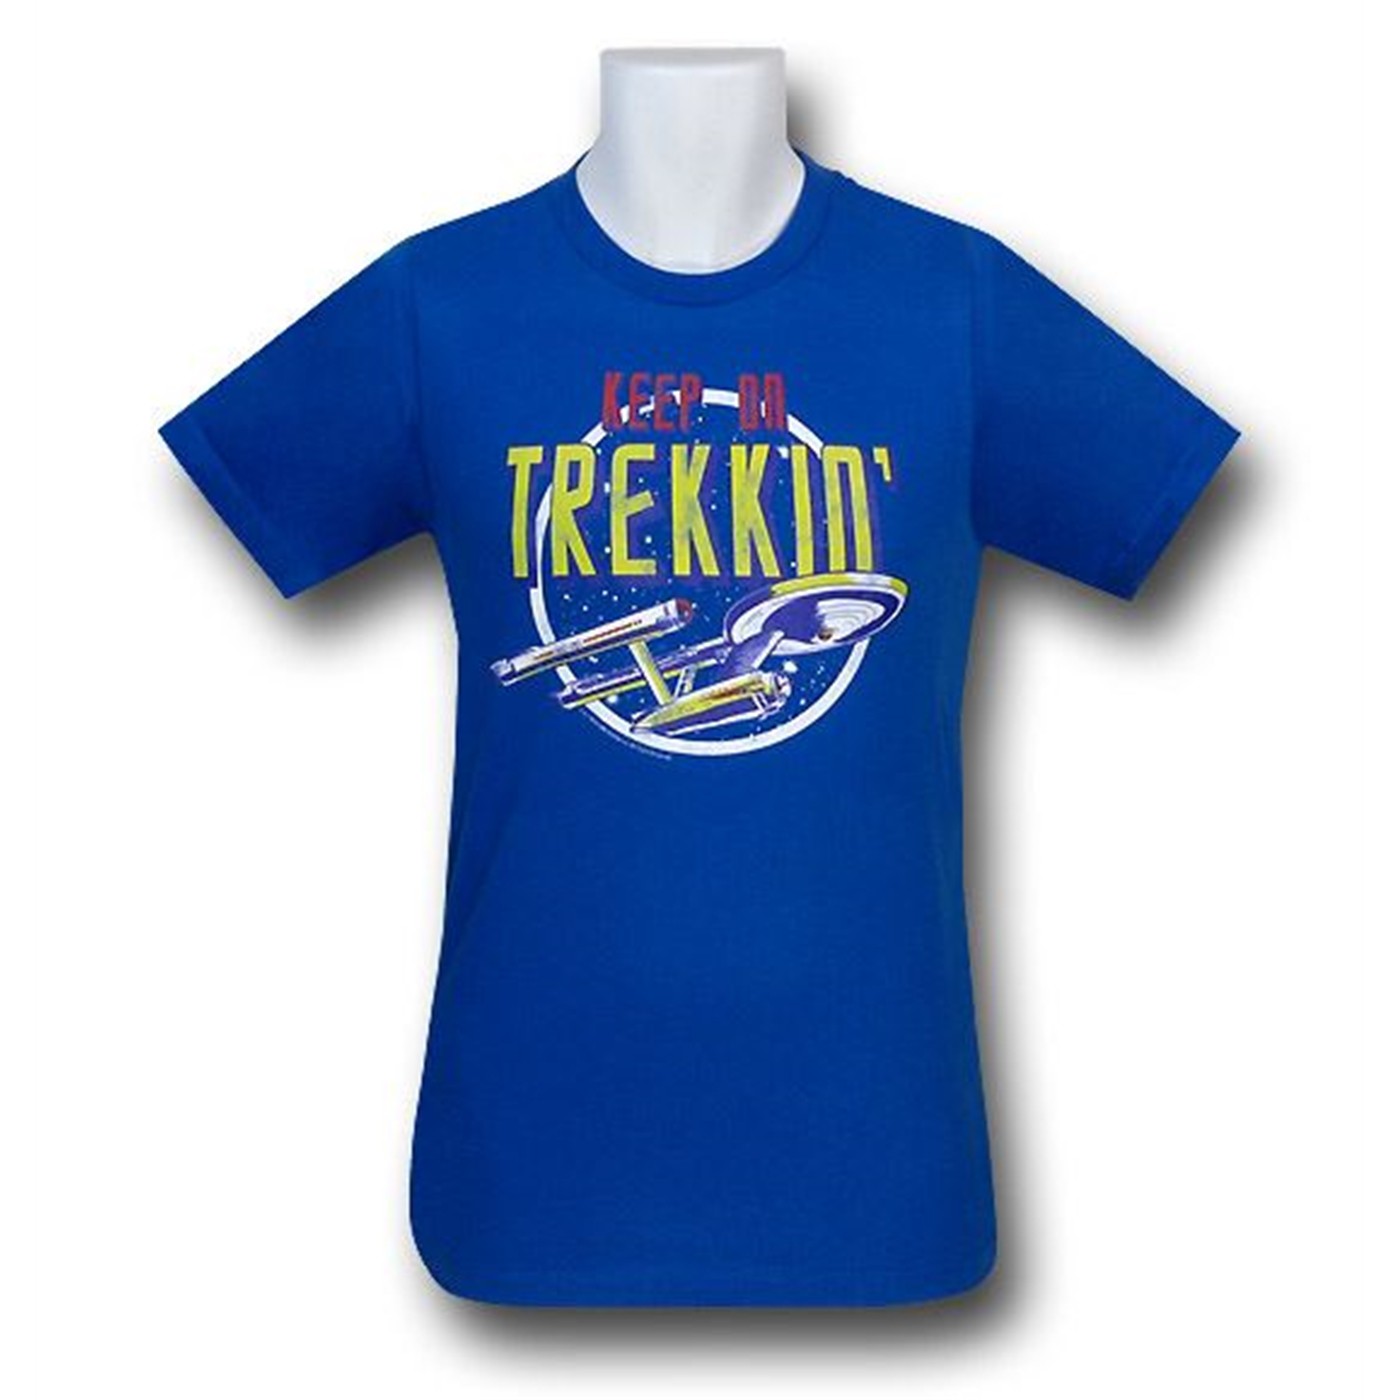 Star Trek Keep On Trekkin' 30 Single T-Shirt